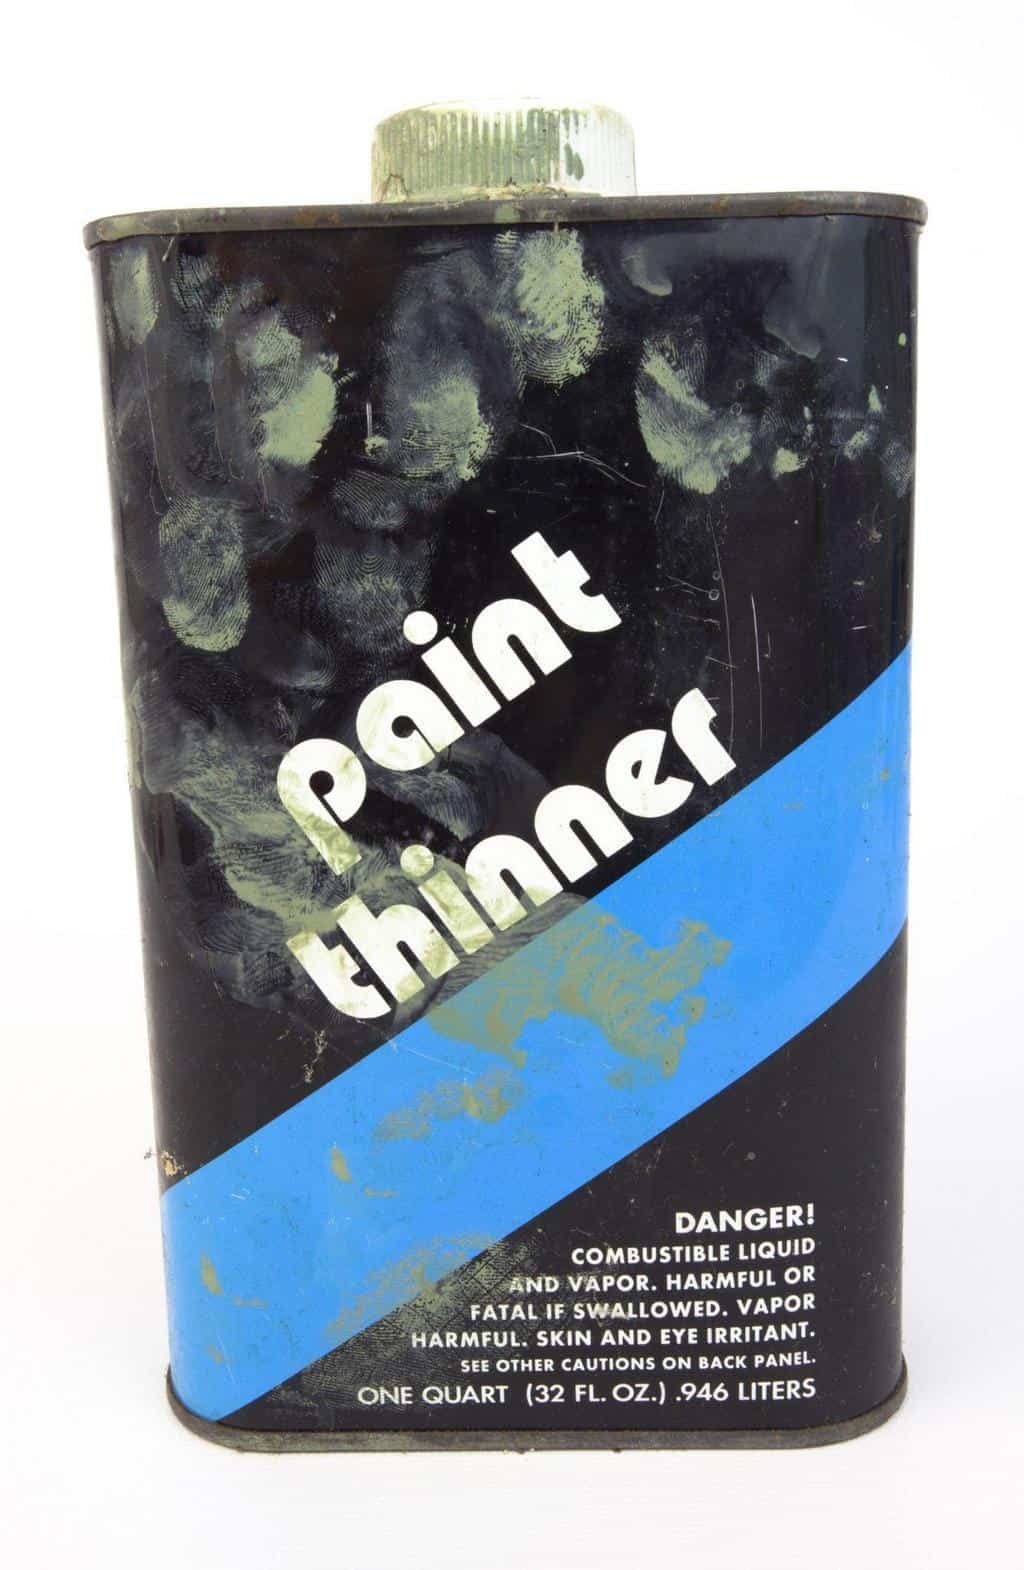 paint thinner